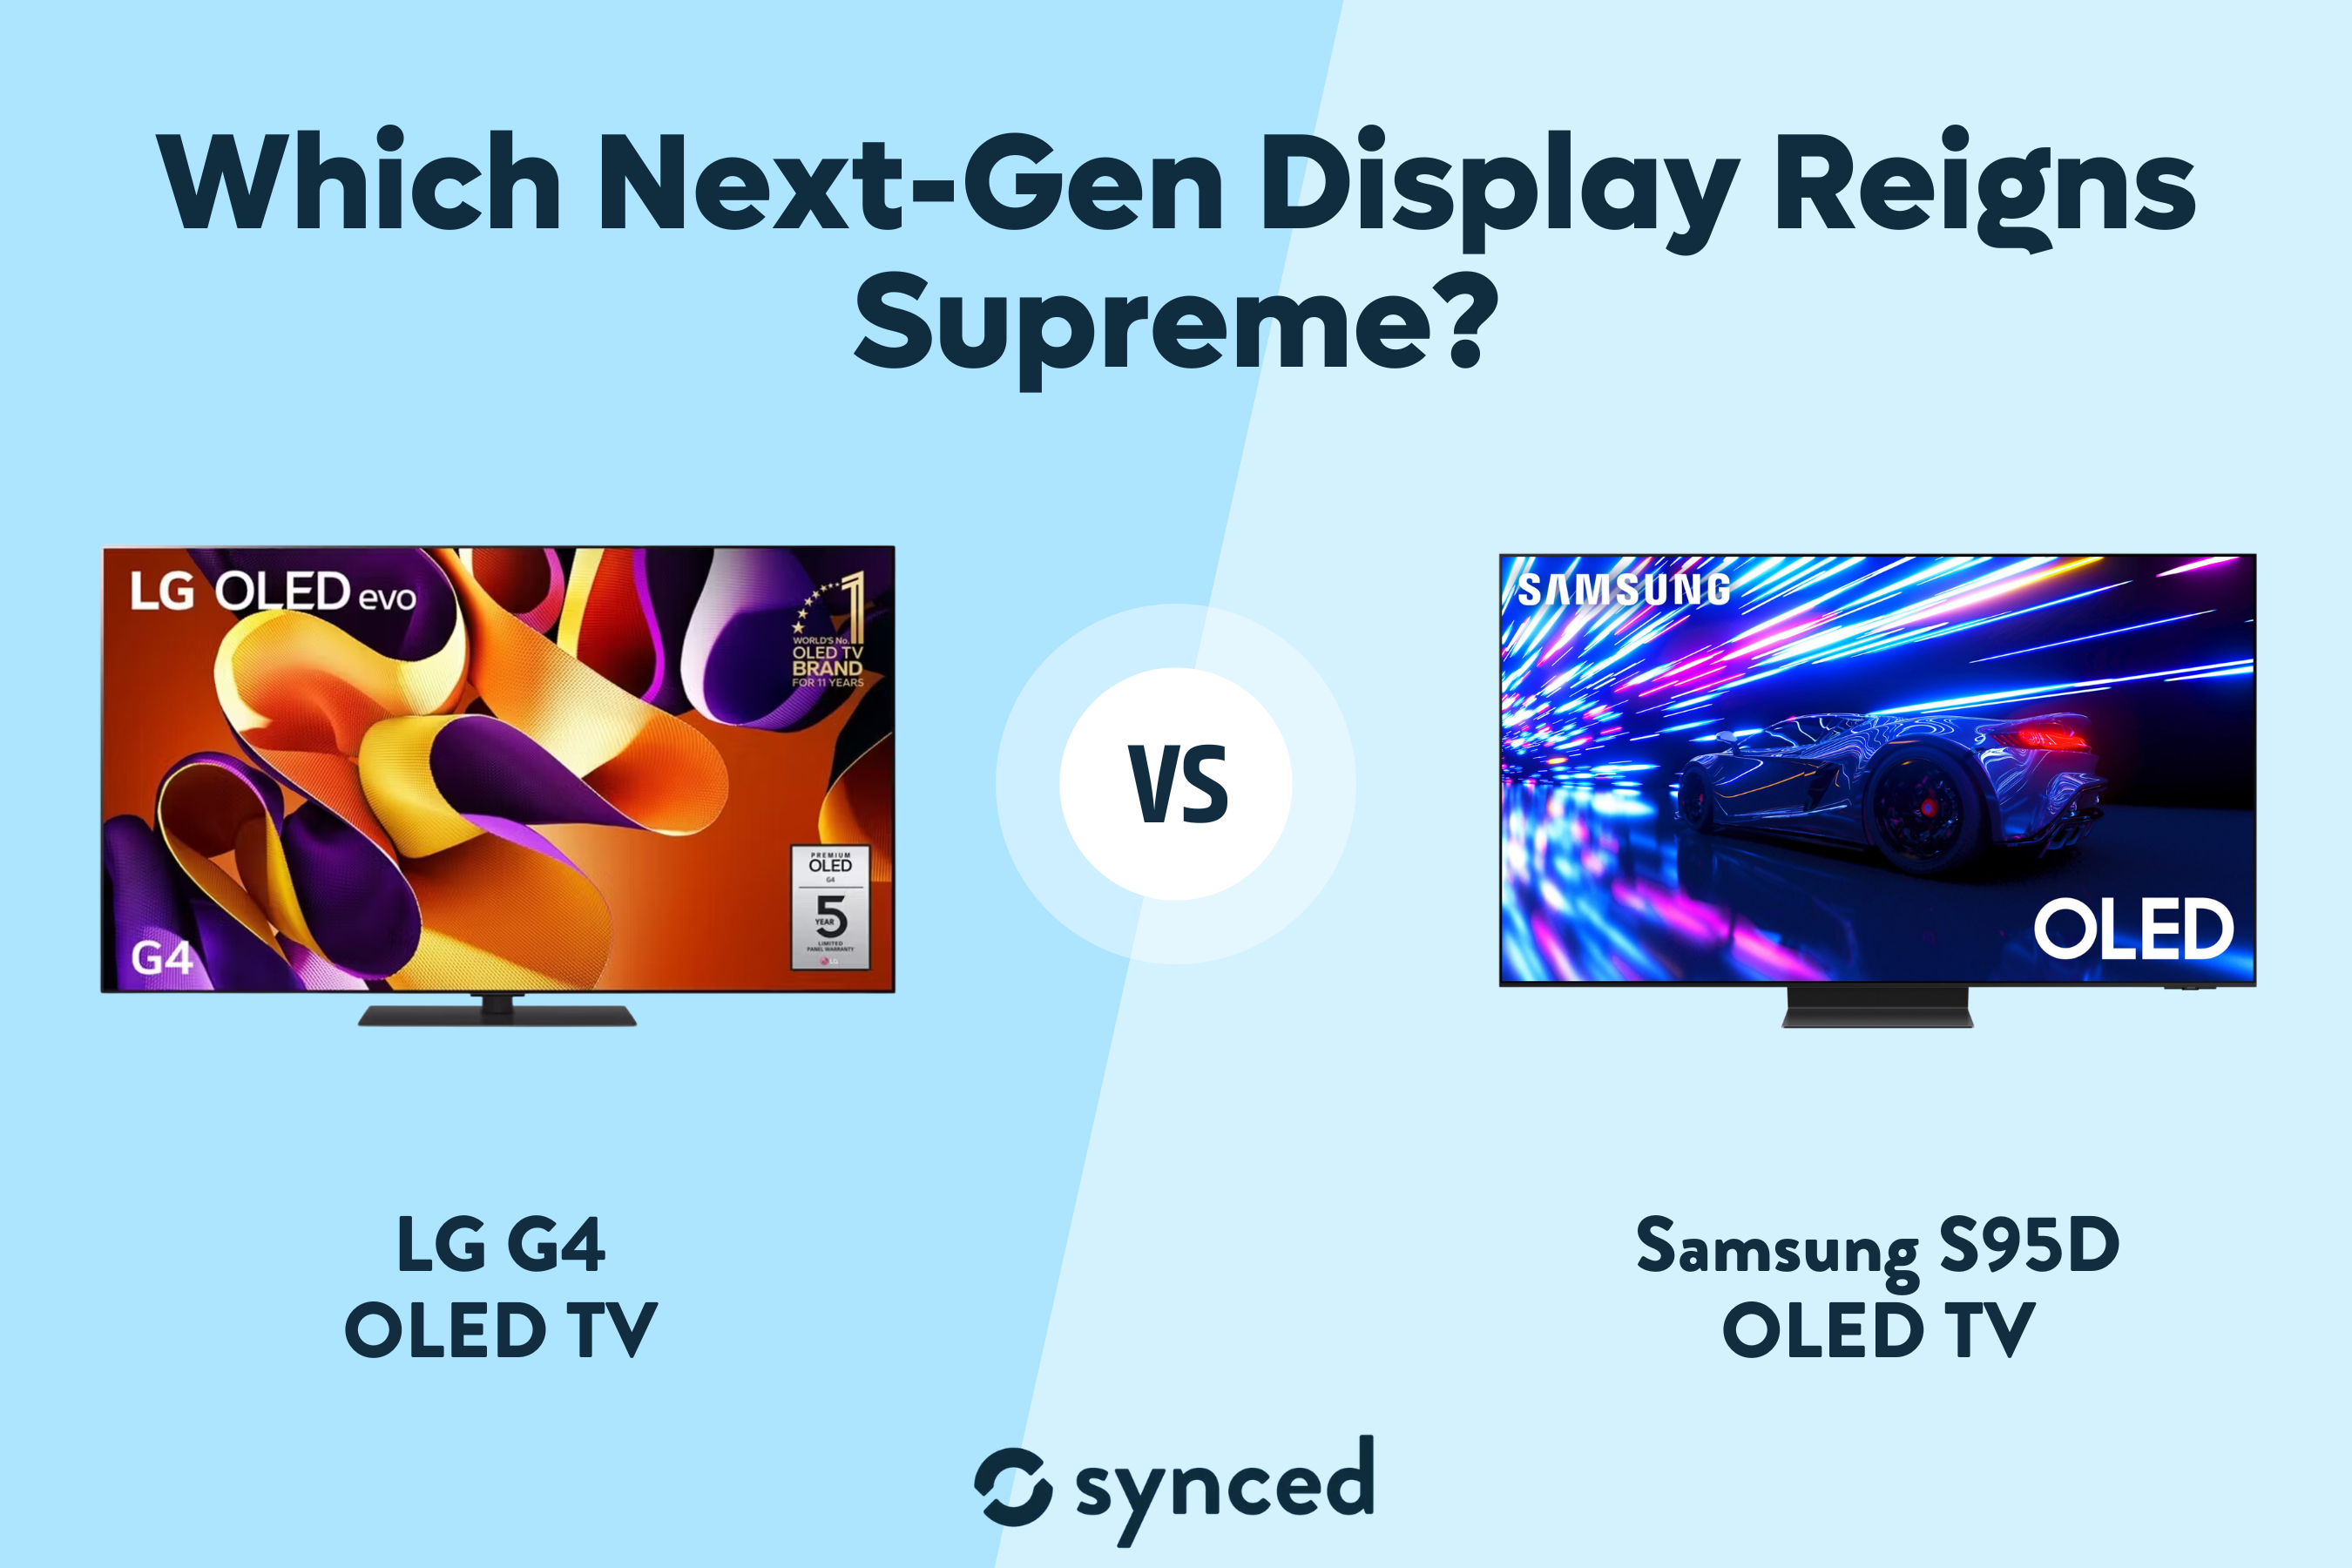 LG G4 OLED TV vs Samsung S95D OLED TV